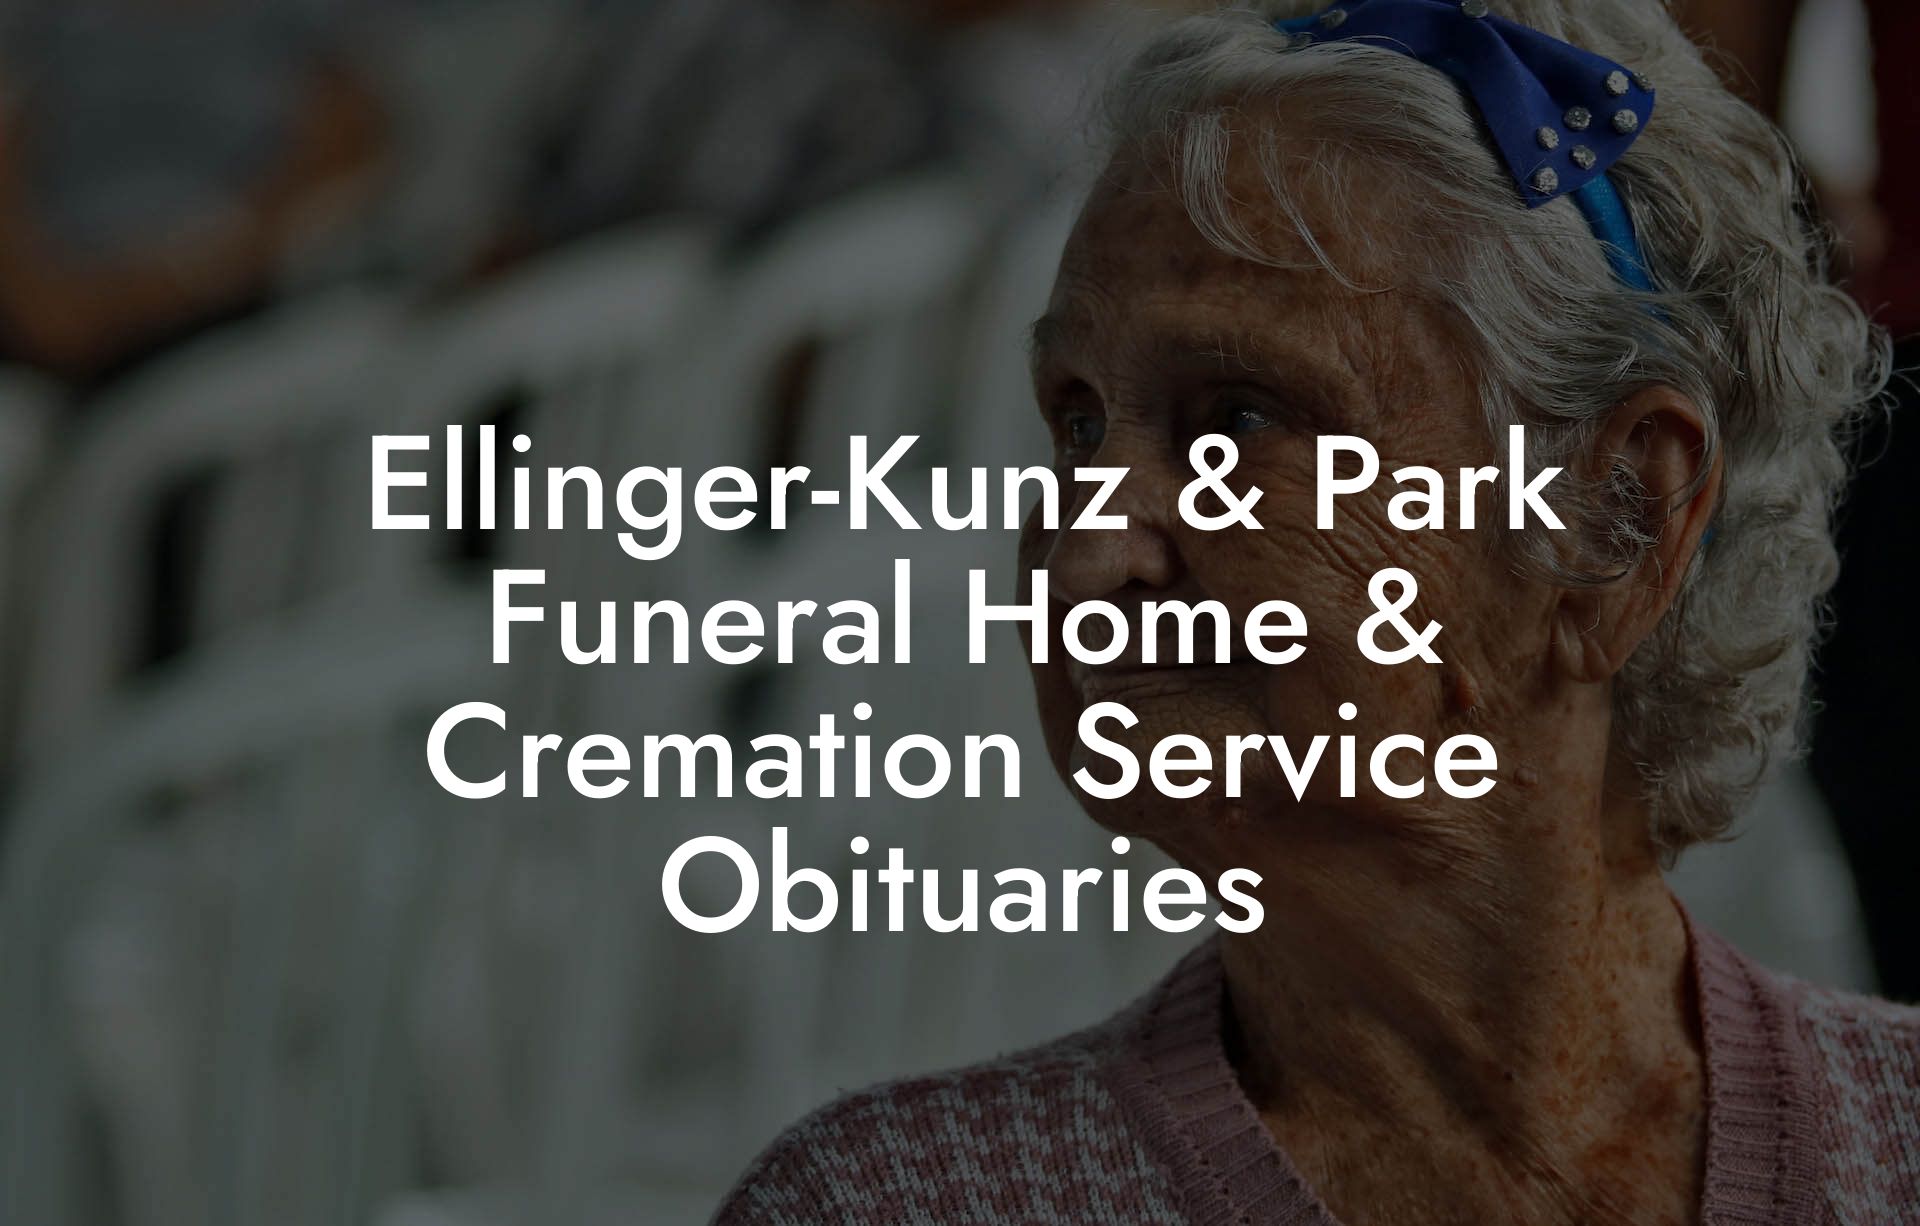 Ellinger-Kunz & Park Funeral Home & Cremation Service Obituaries